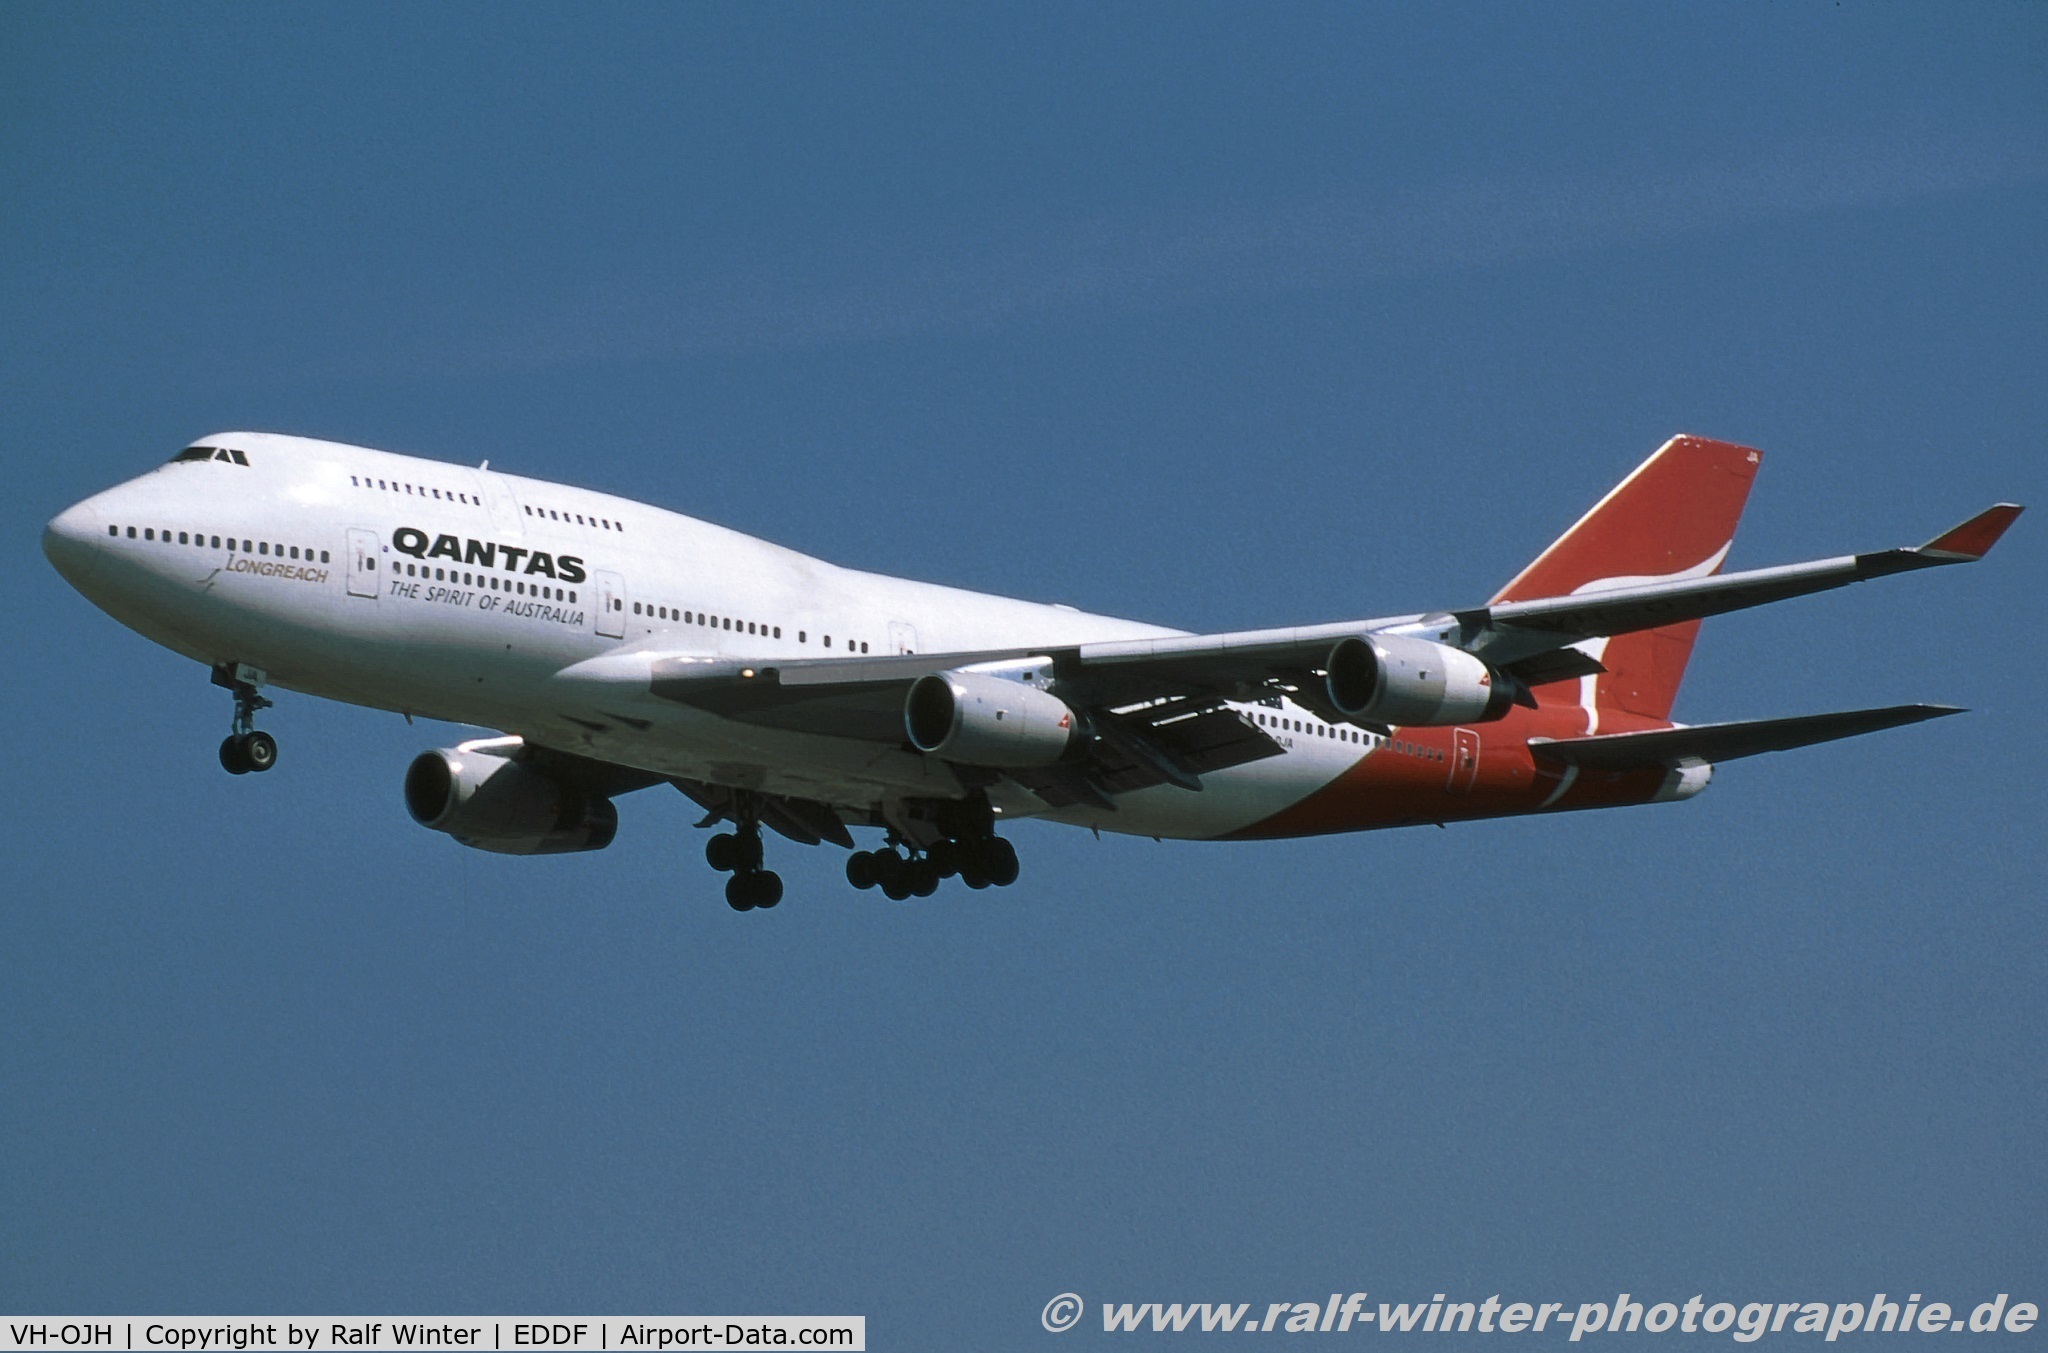 VH-OJH, 1990 Boeing 747-438 C/N 24806, Boeing 747-438 - QF QFA Qantas 'City of Darwin' - 24354 - VH-OJA - 1998 - FRA